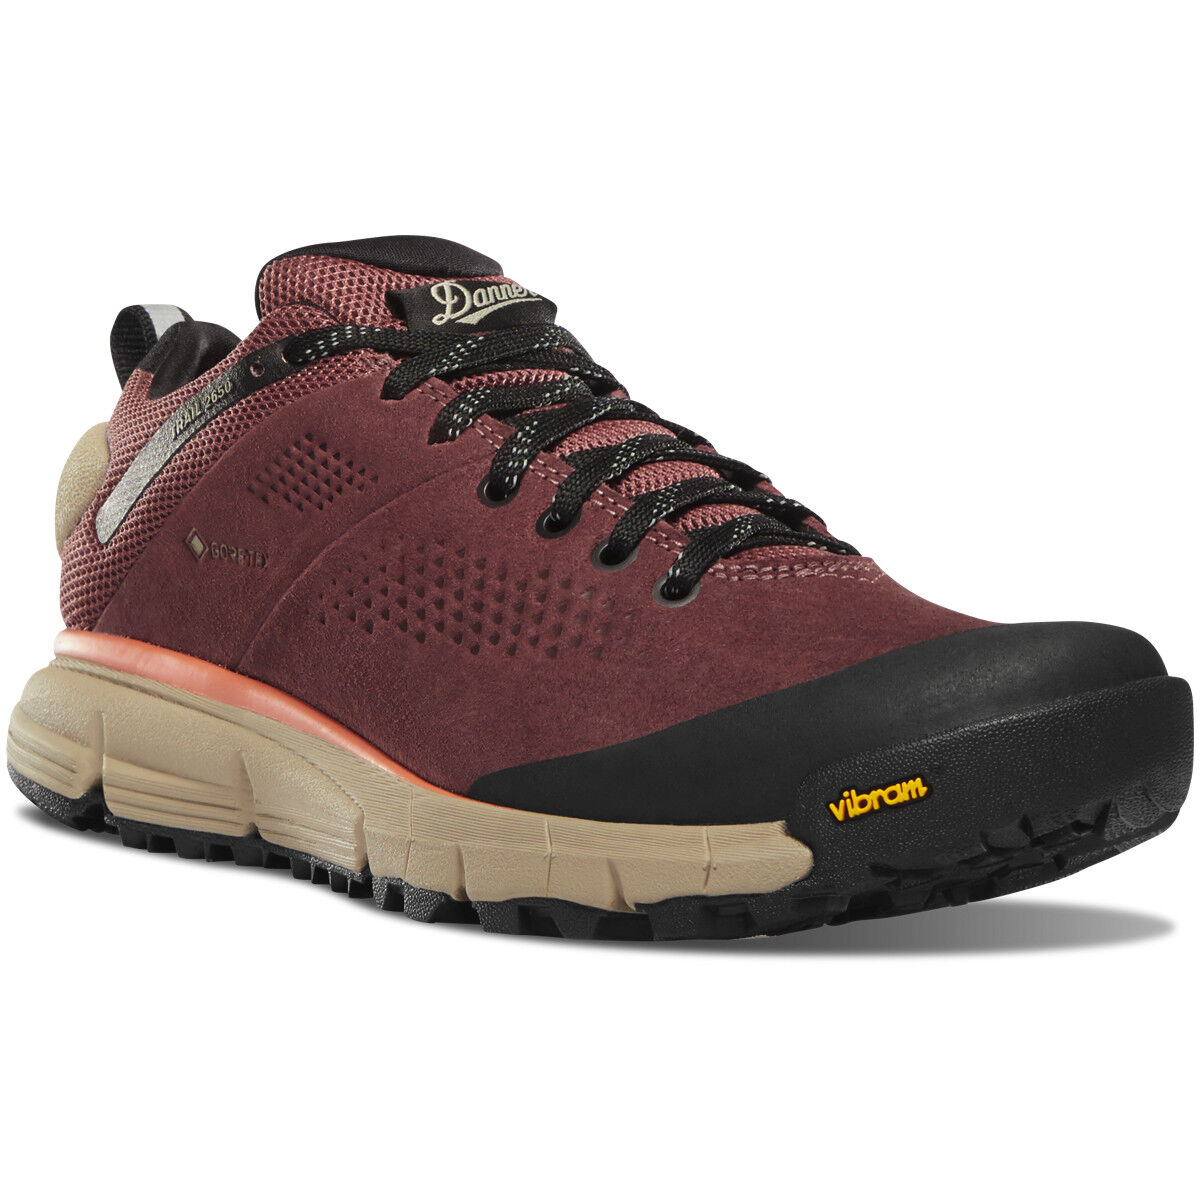 Danner Trail 2650 3 GTX - Hiking shoes - Women's